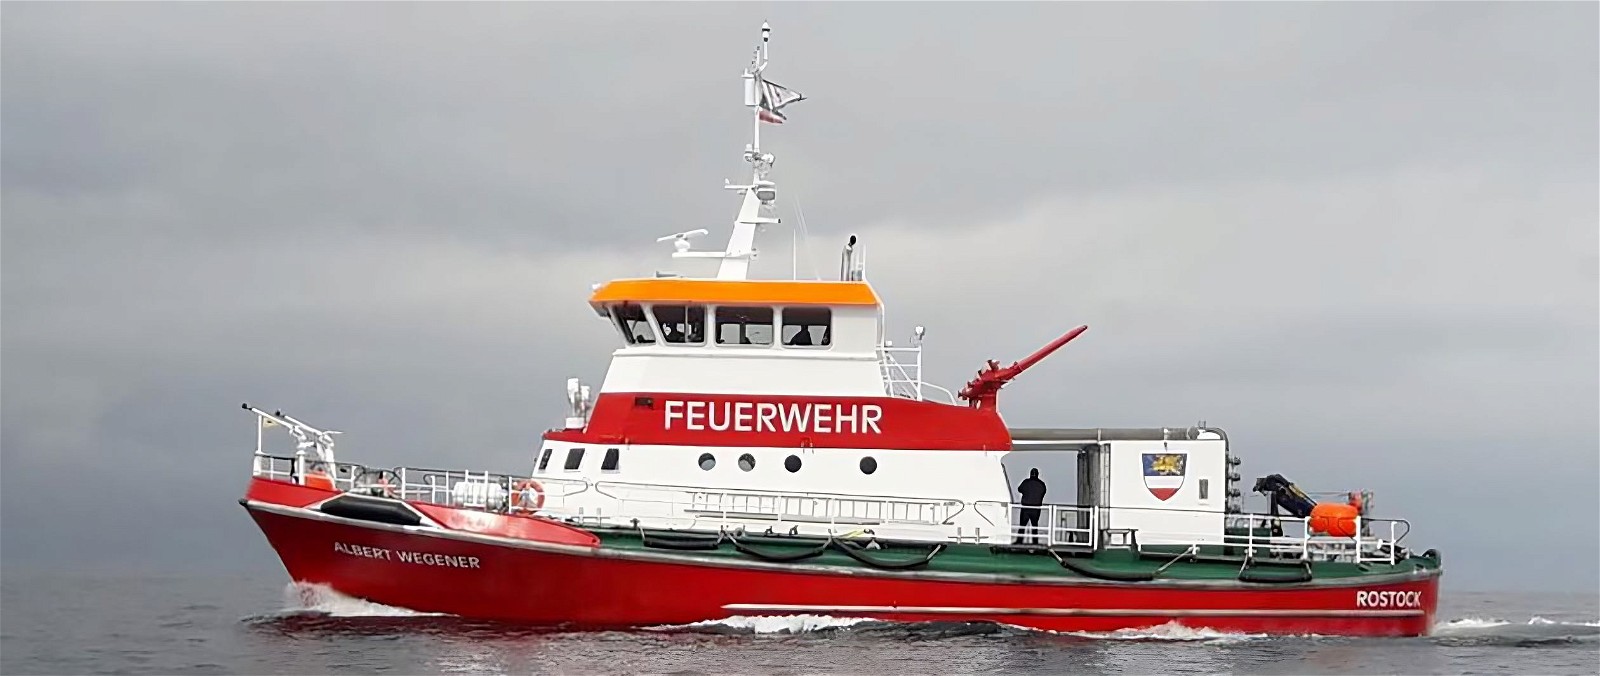 the albert wegener fireboat 704 transformed